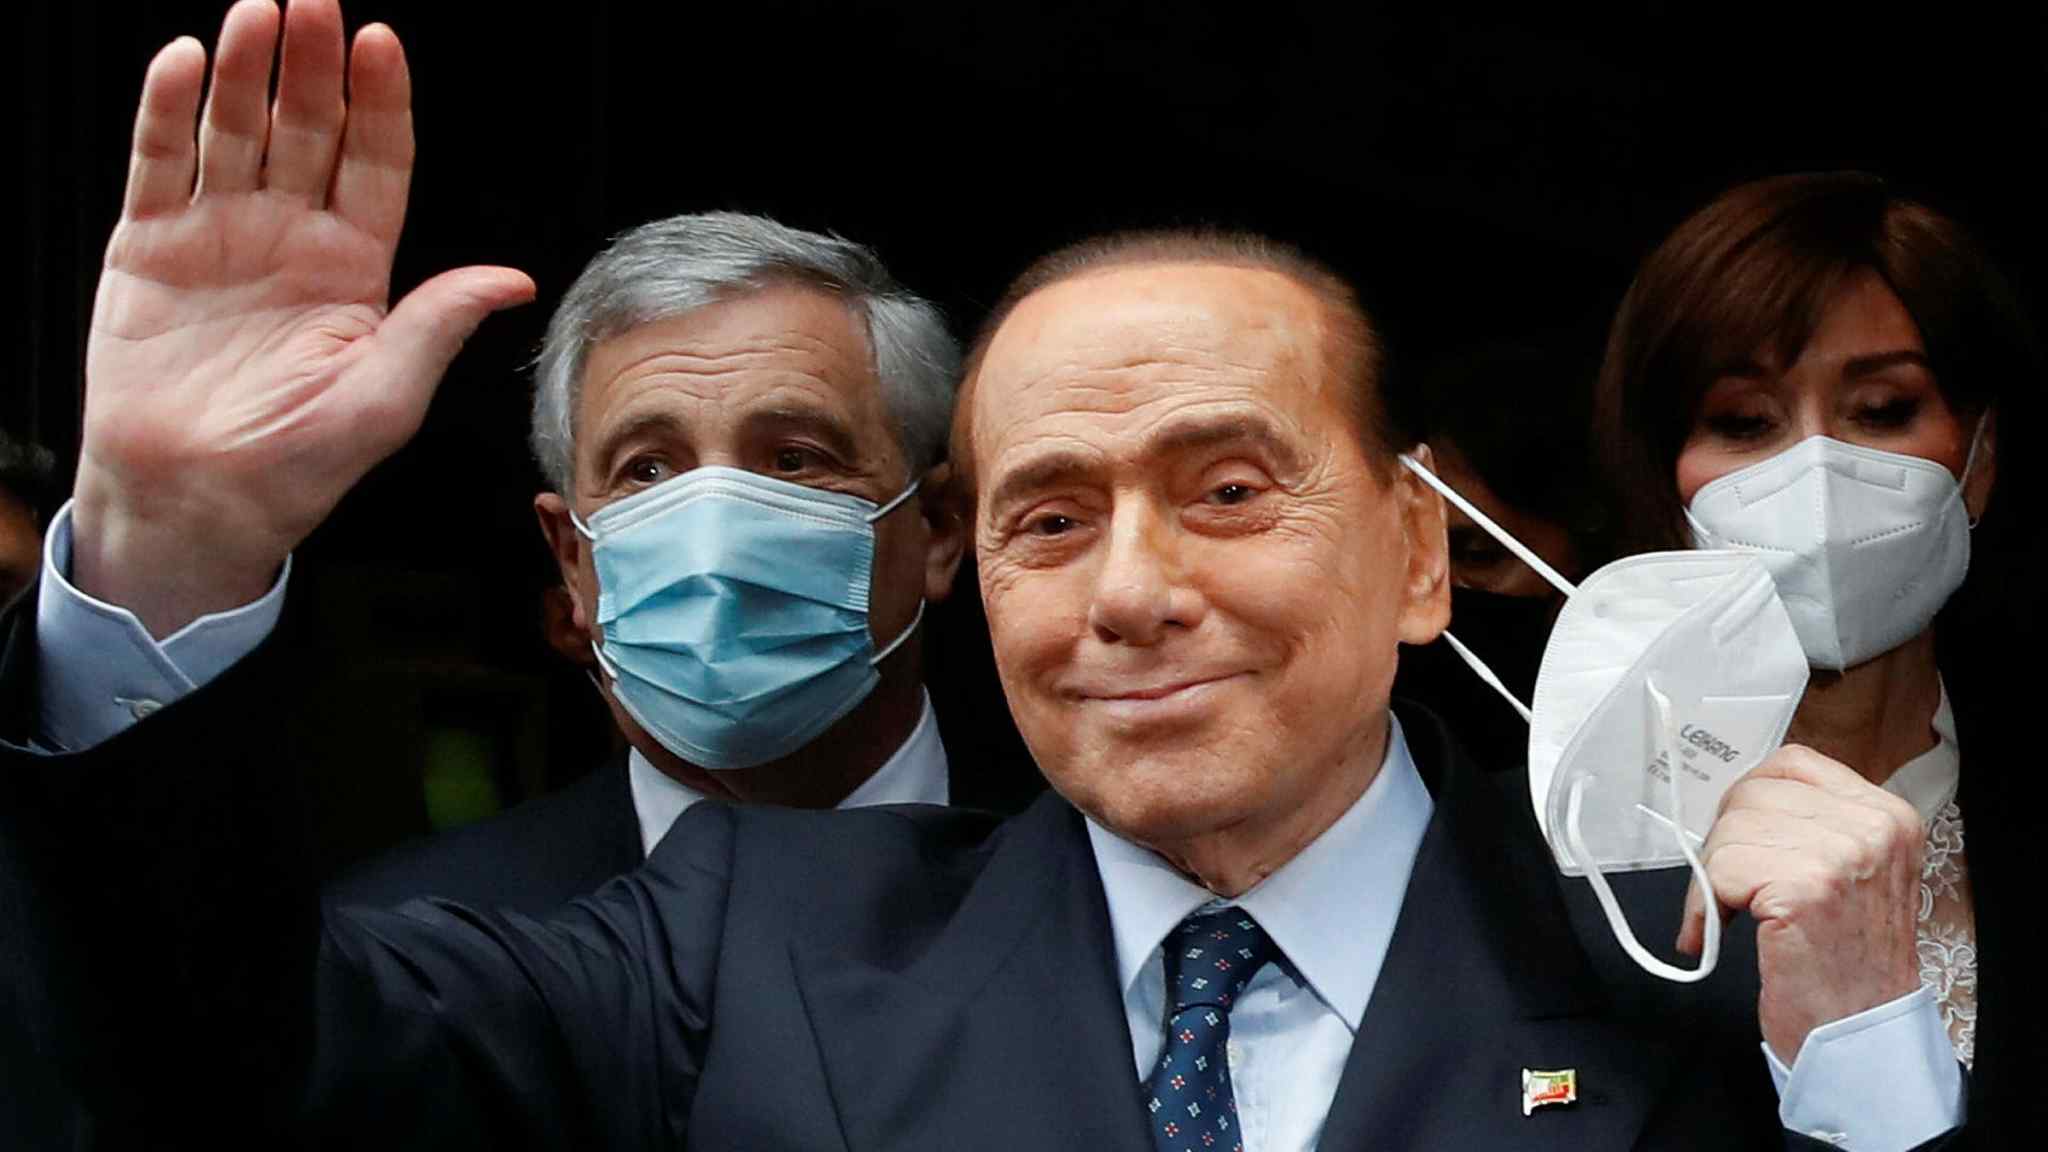 Berlusconi abandons long-shot bid for Italian presidency